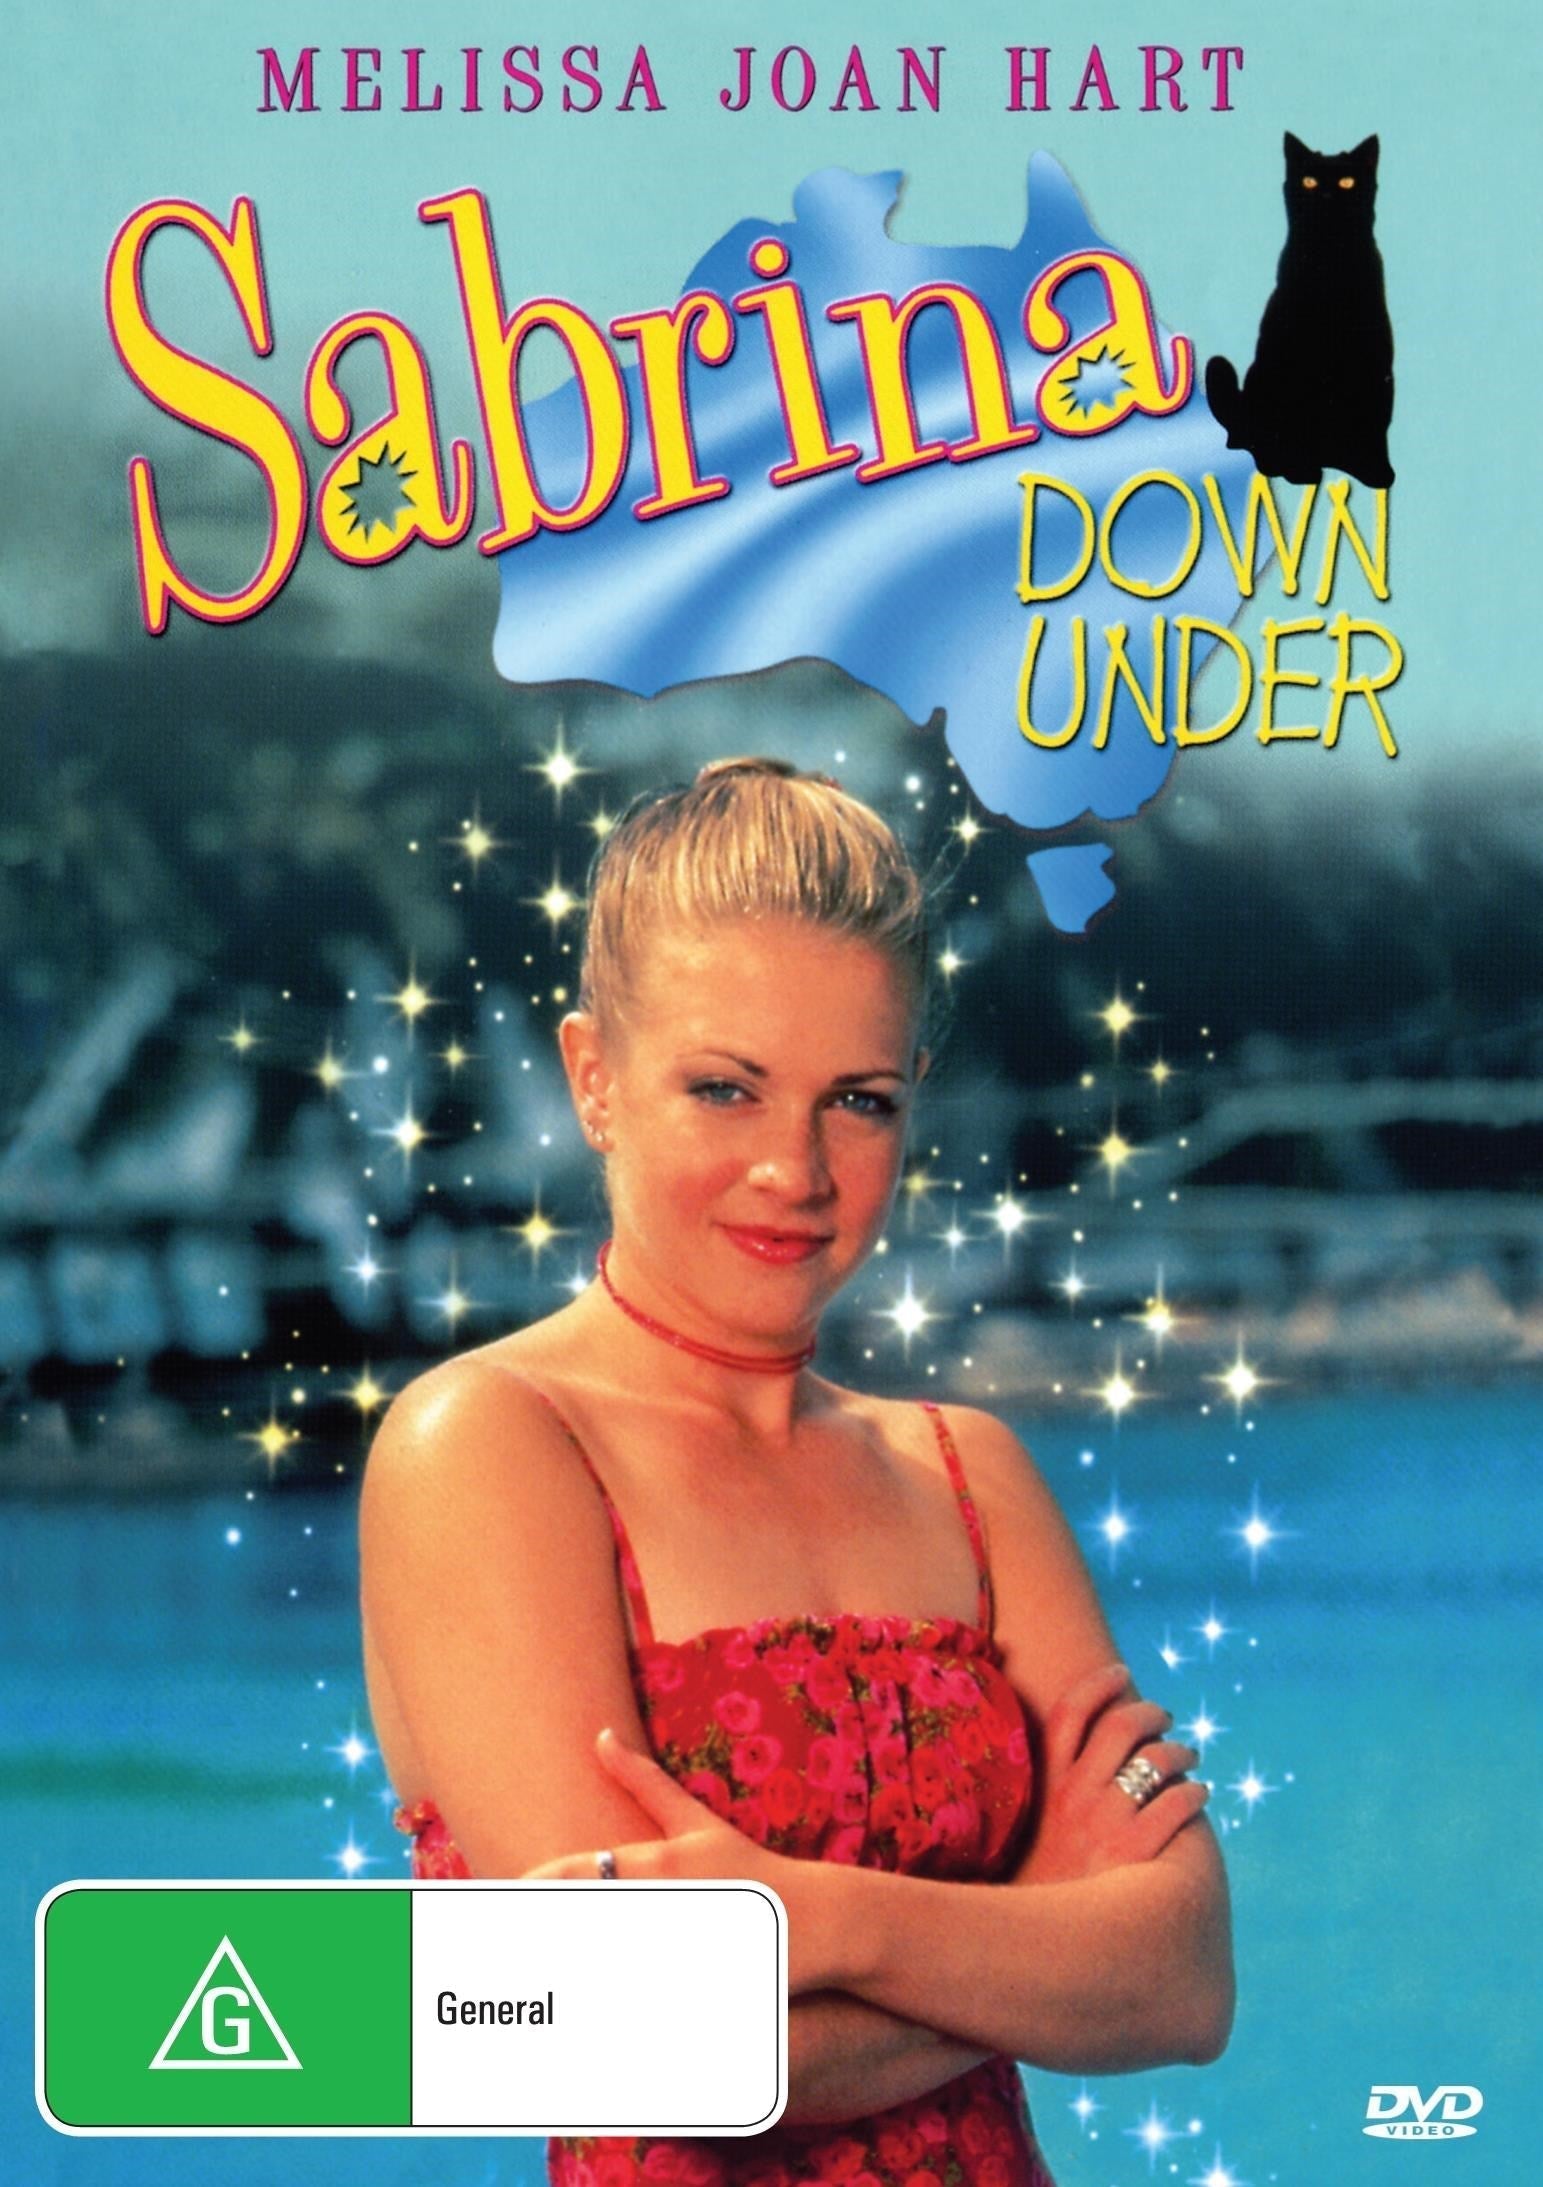 Sabrina Down Under rareandcollectibledvds